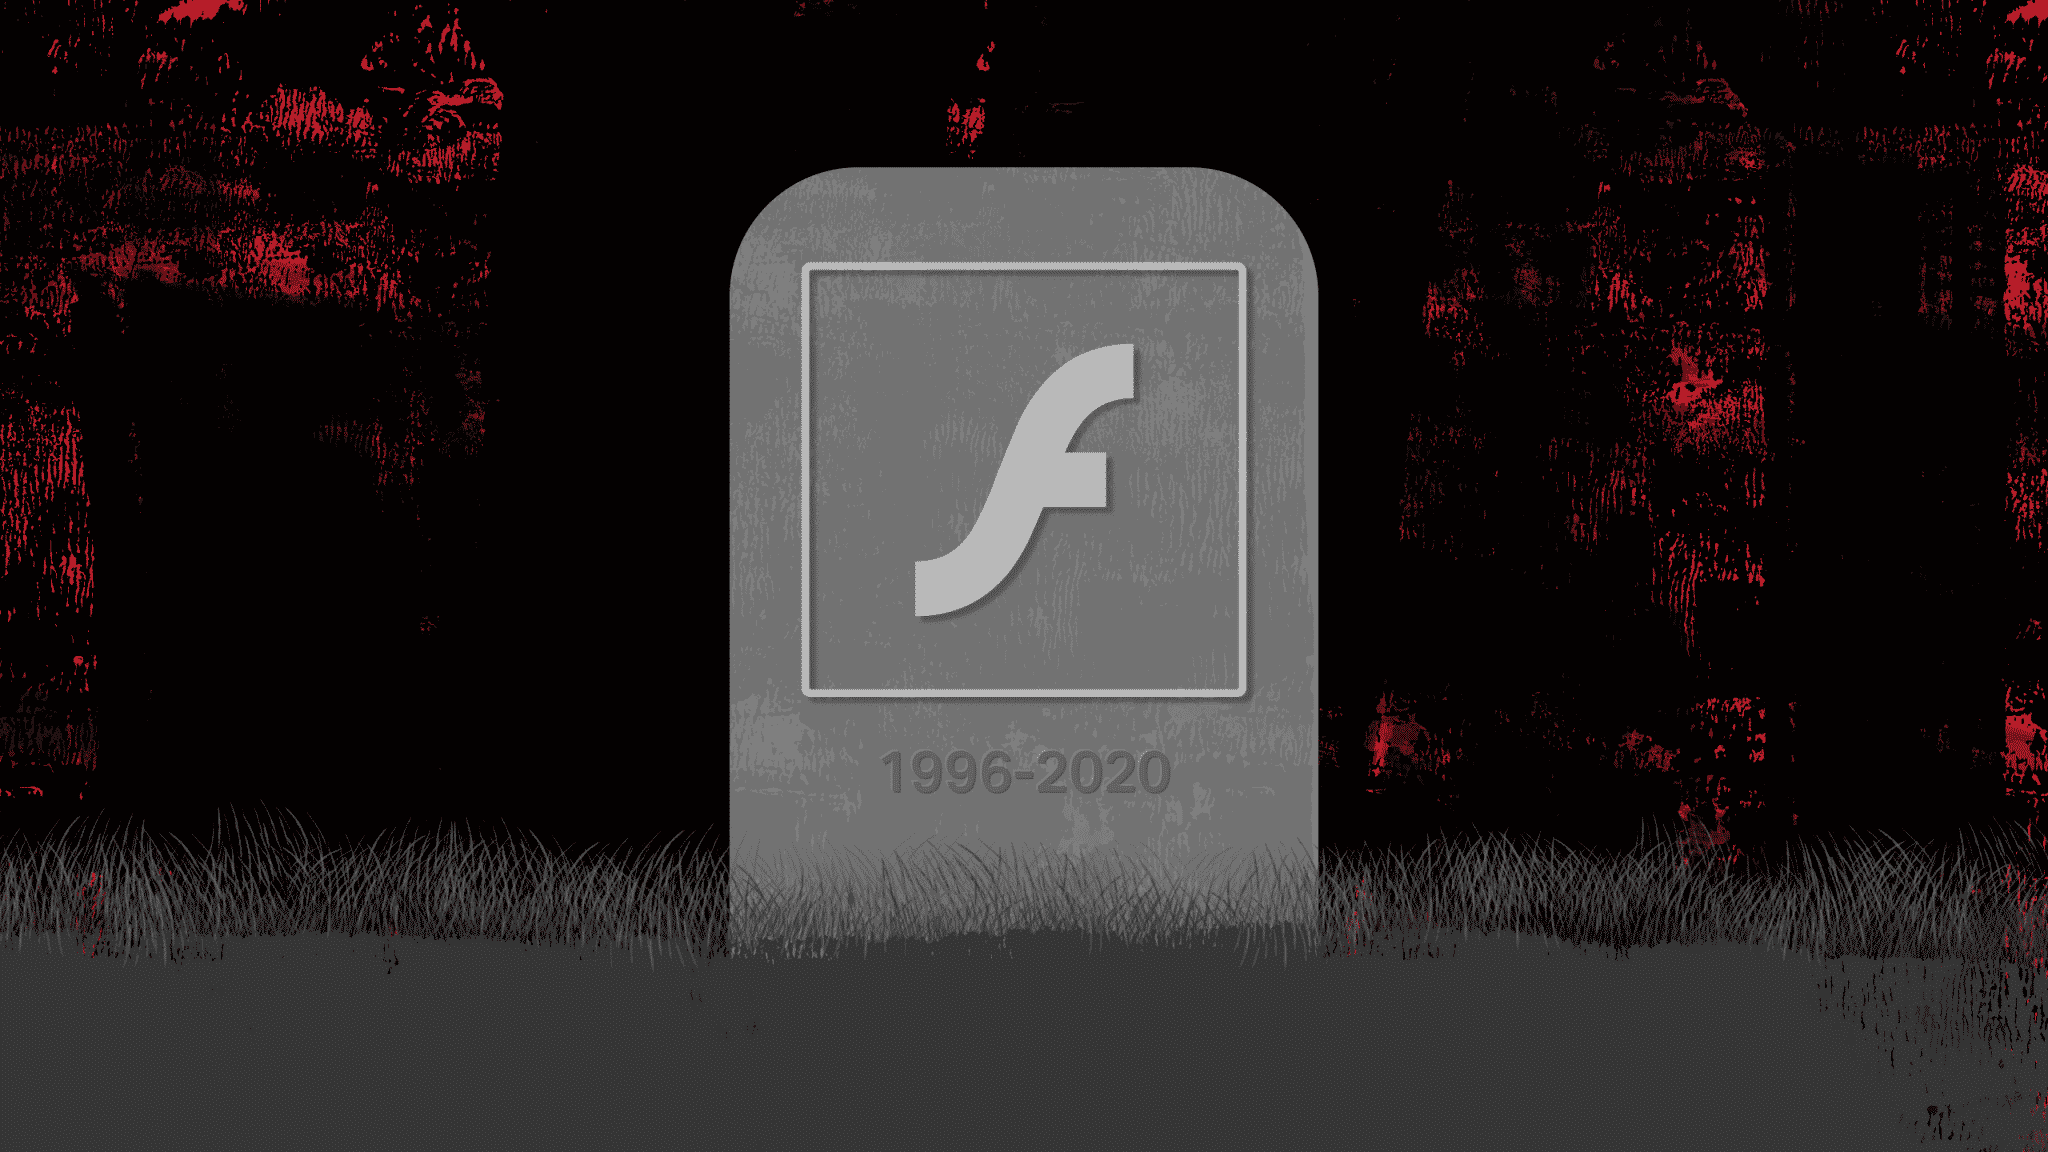 Addio Flash Player, è ora di dirsi ciao!